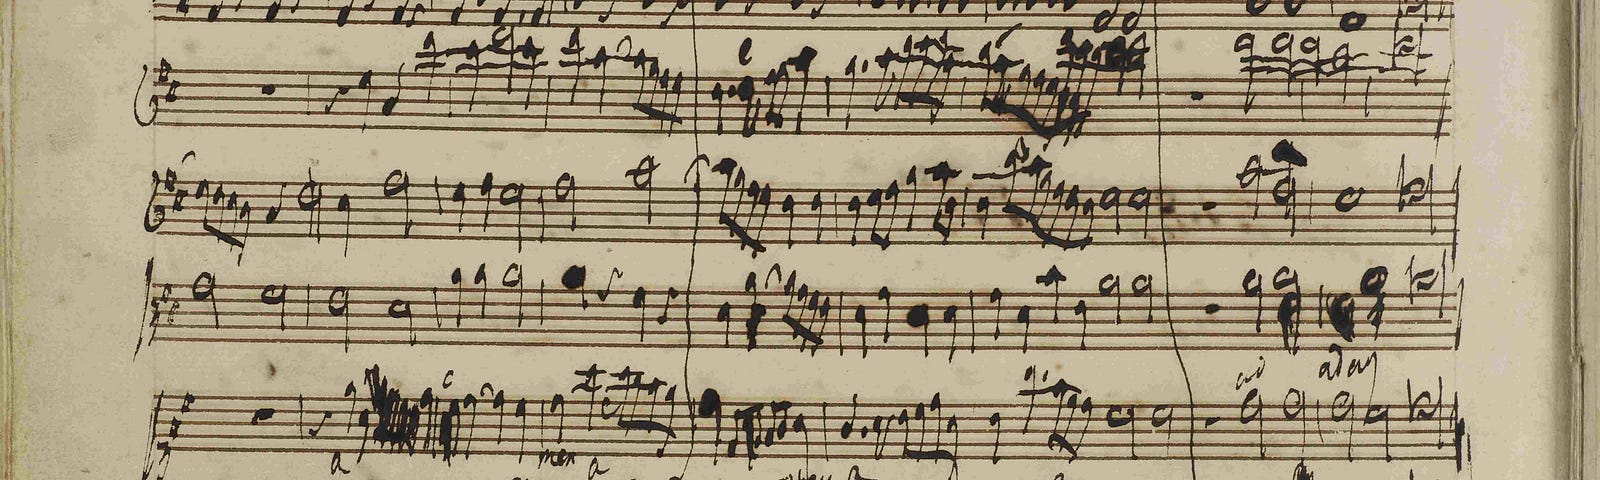 handwritten music with Handel’s signature at the bottom